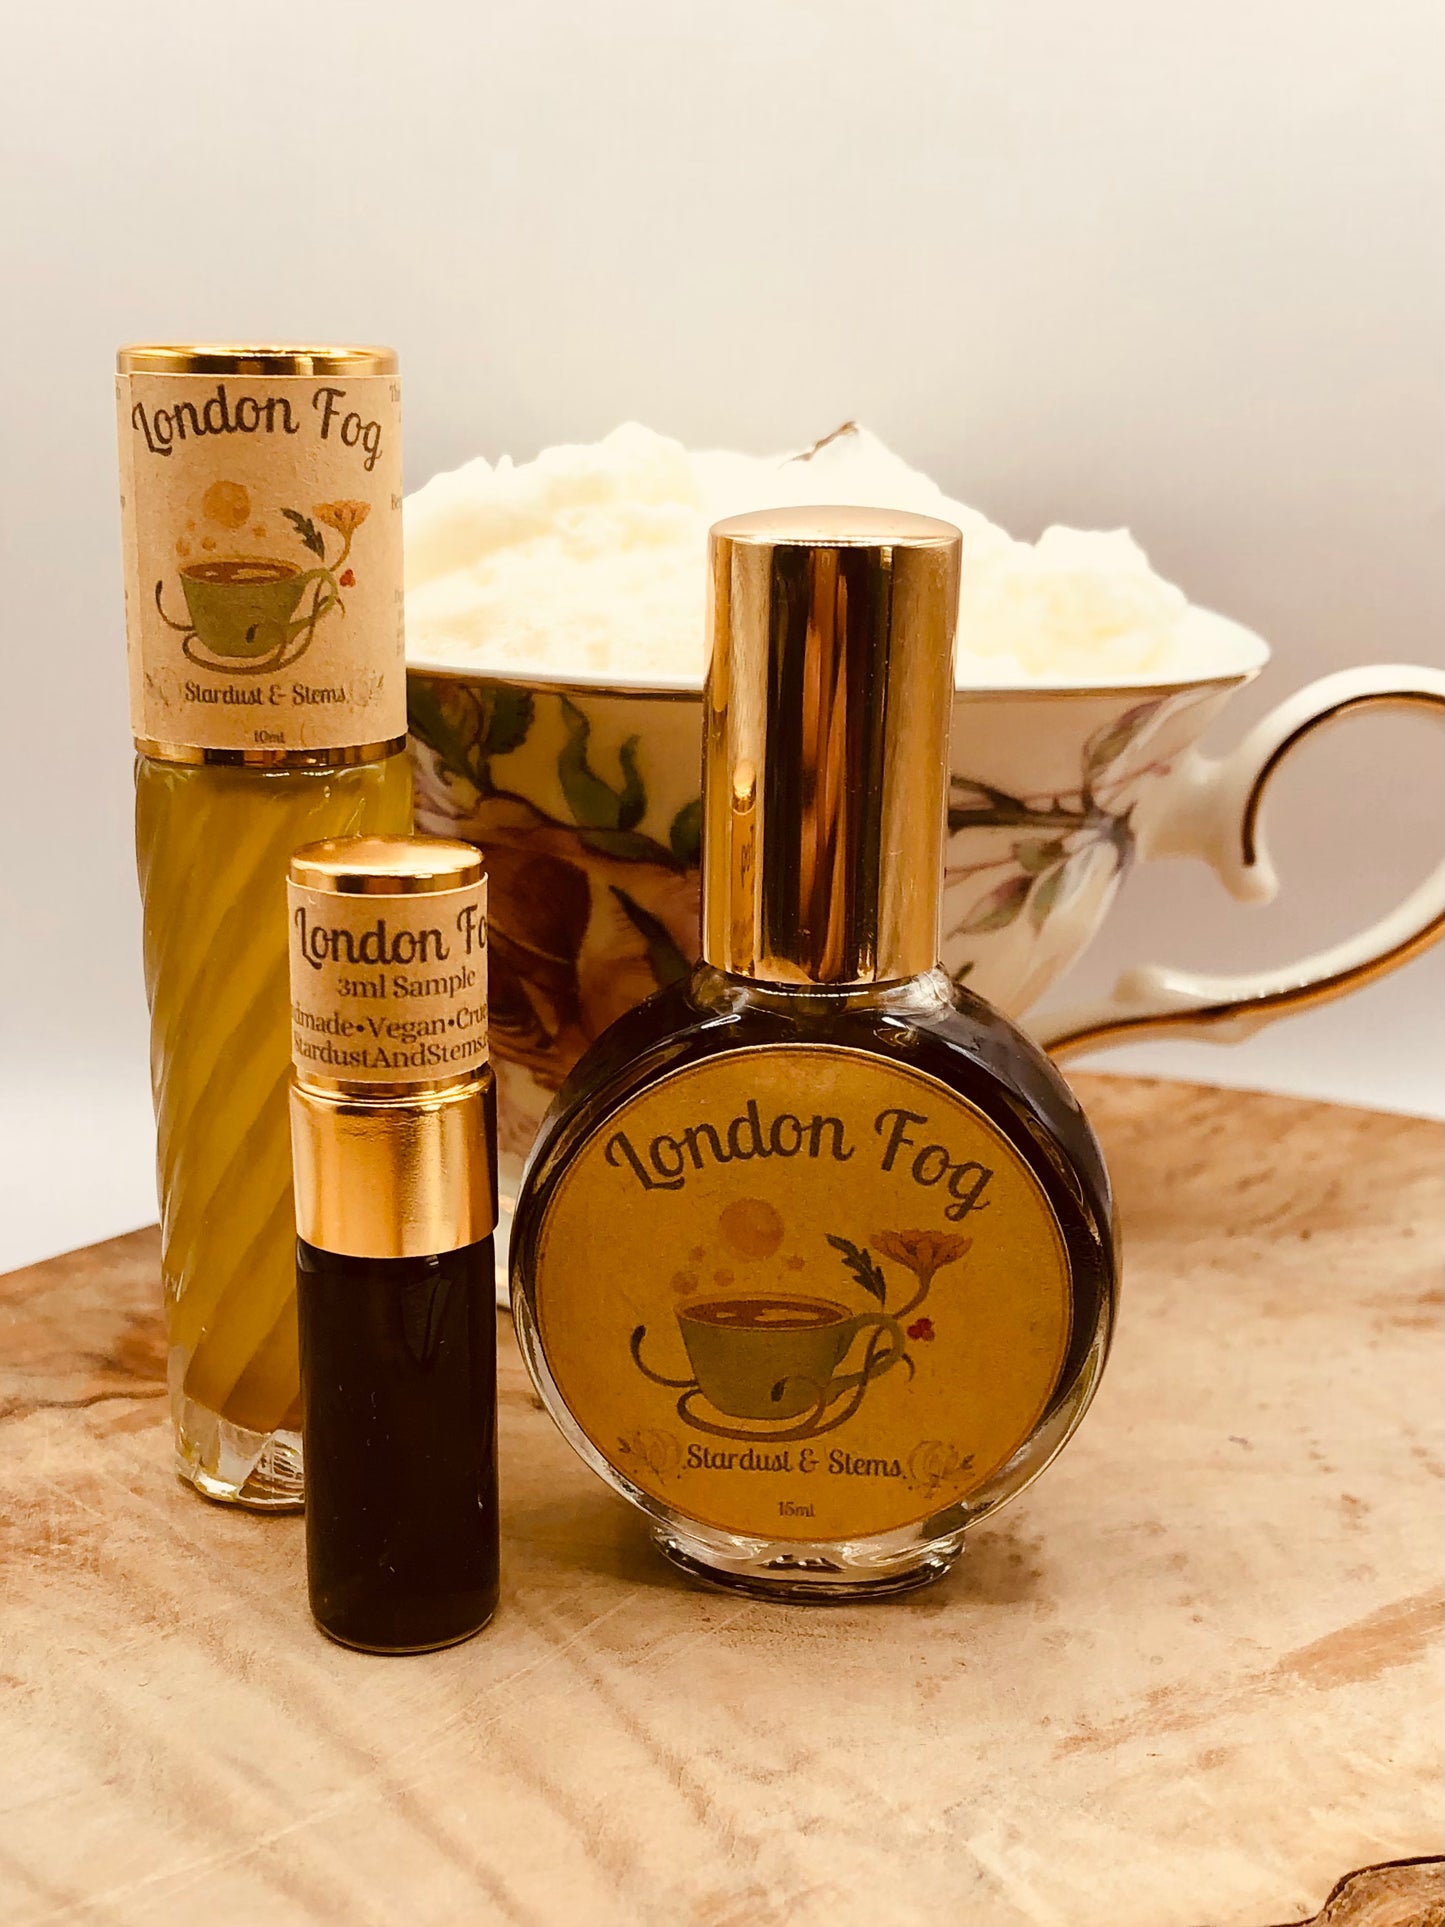 London Fog Perfume, Handmade Indie Perfume with Real Black Tea, Lavender, Bergamot and Lucious Creamy Vanilla